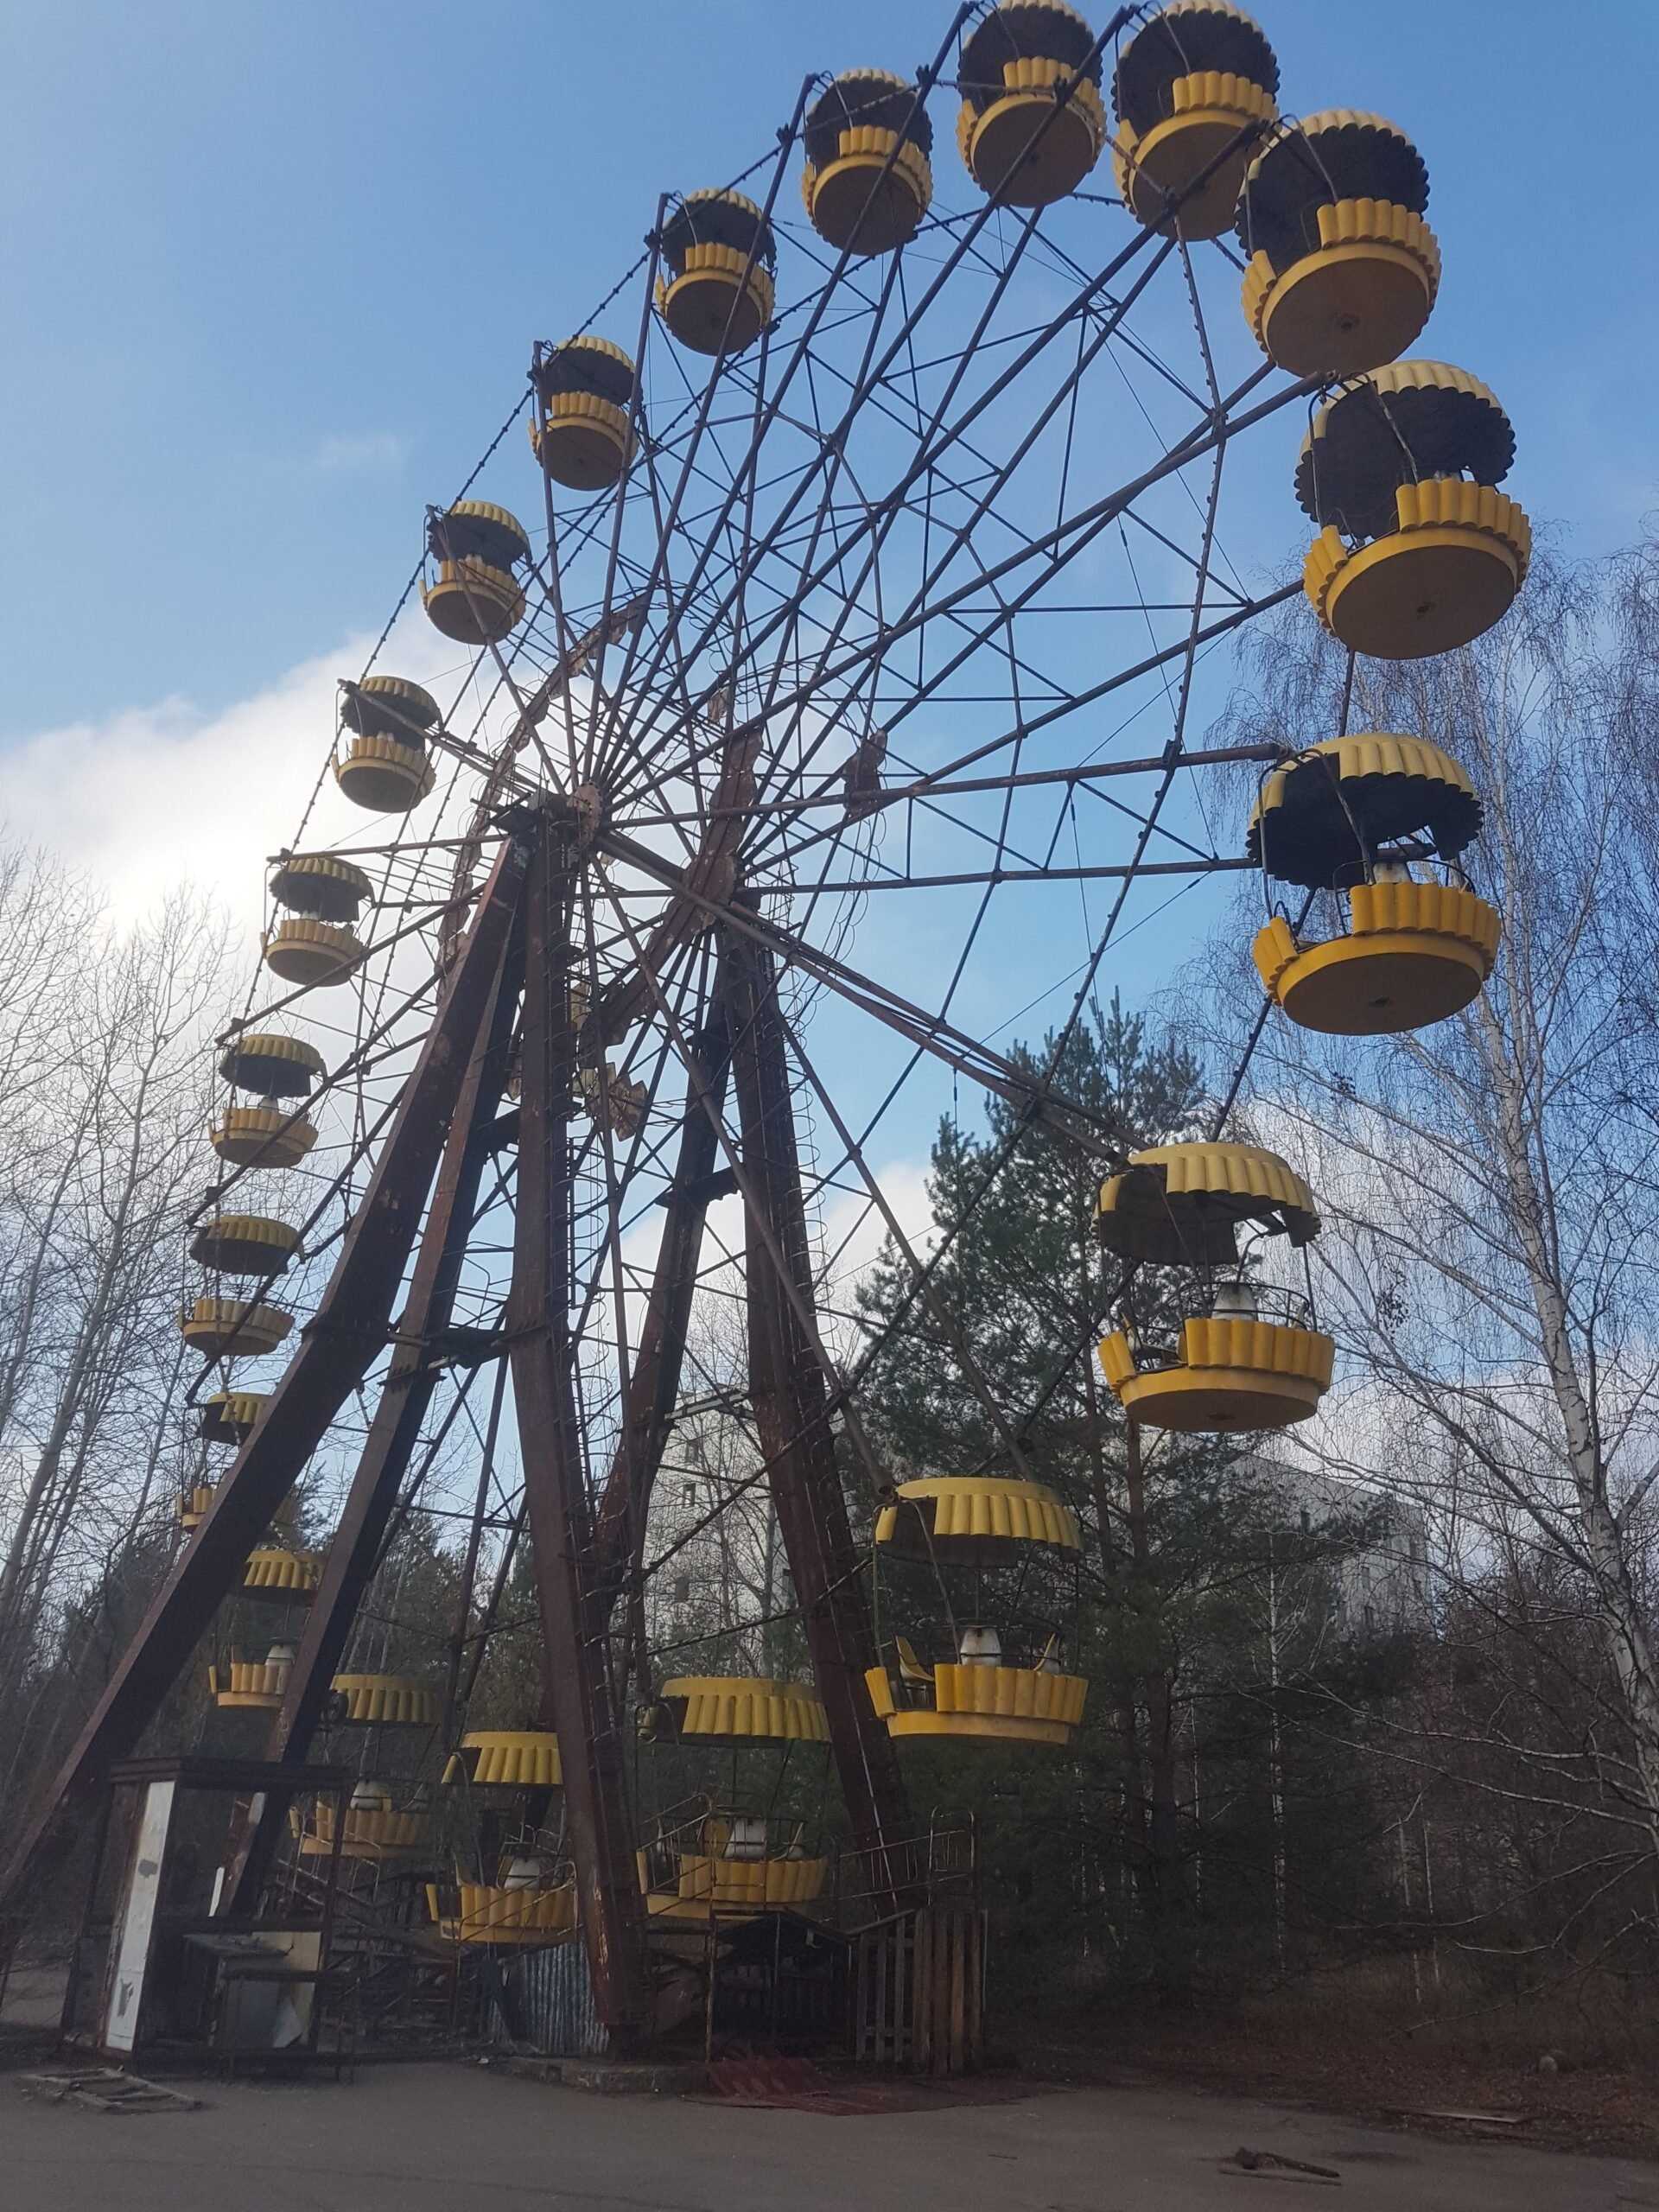 The Ferris wheel at Chernobyl.